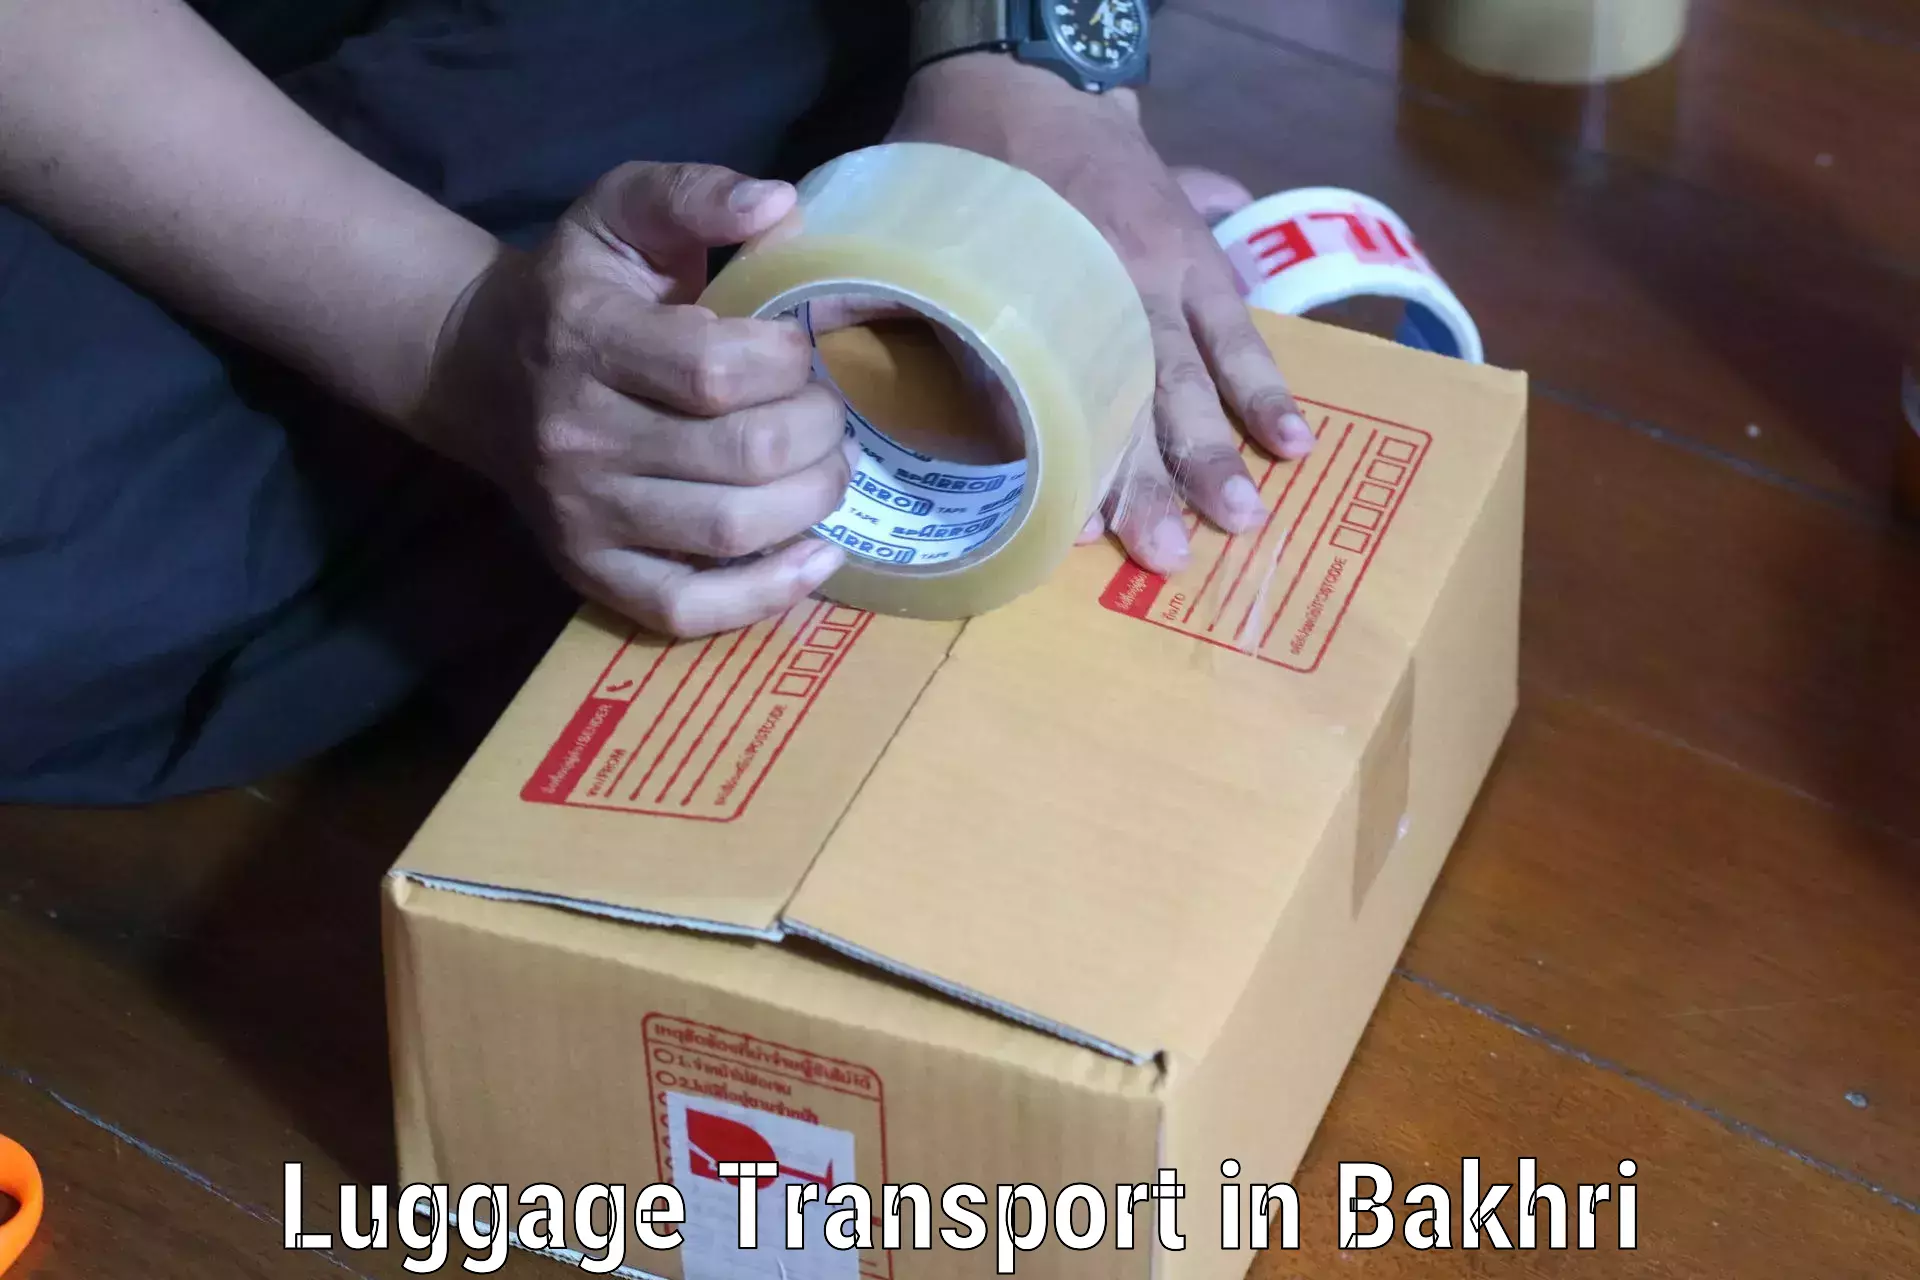 Luggage transport company in Bakhri